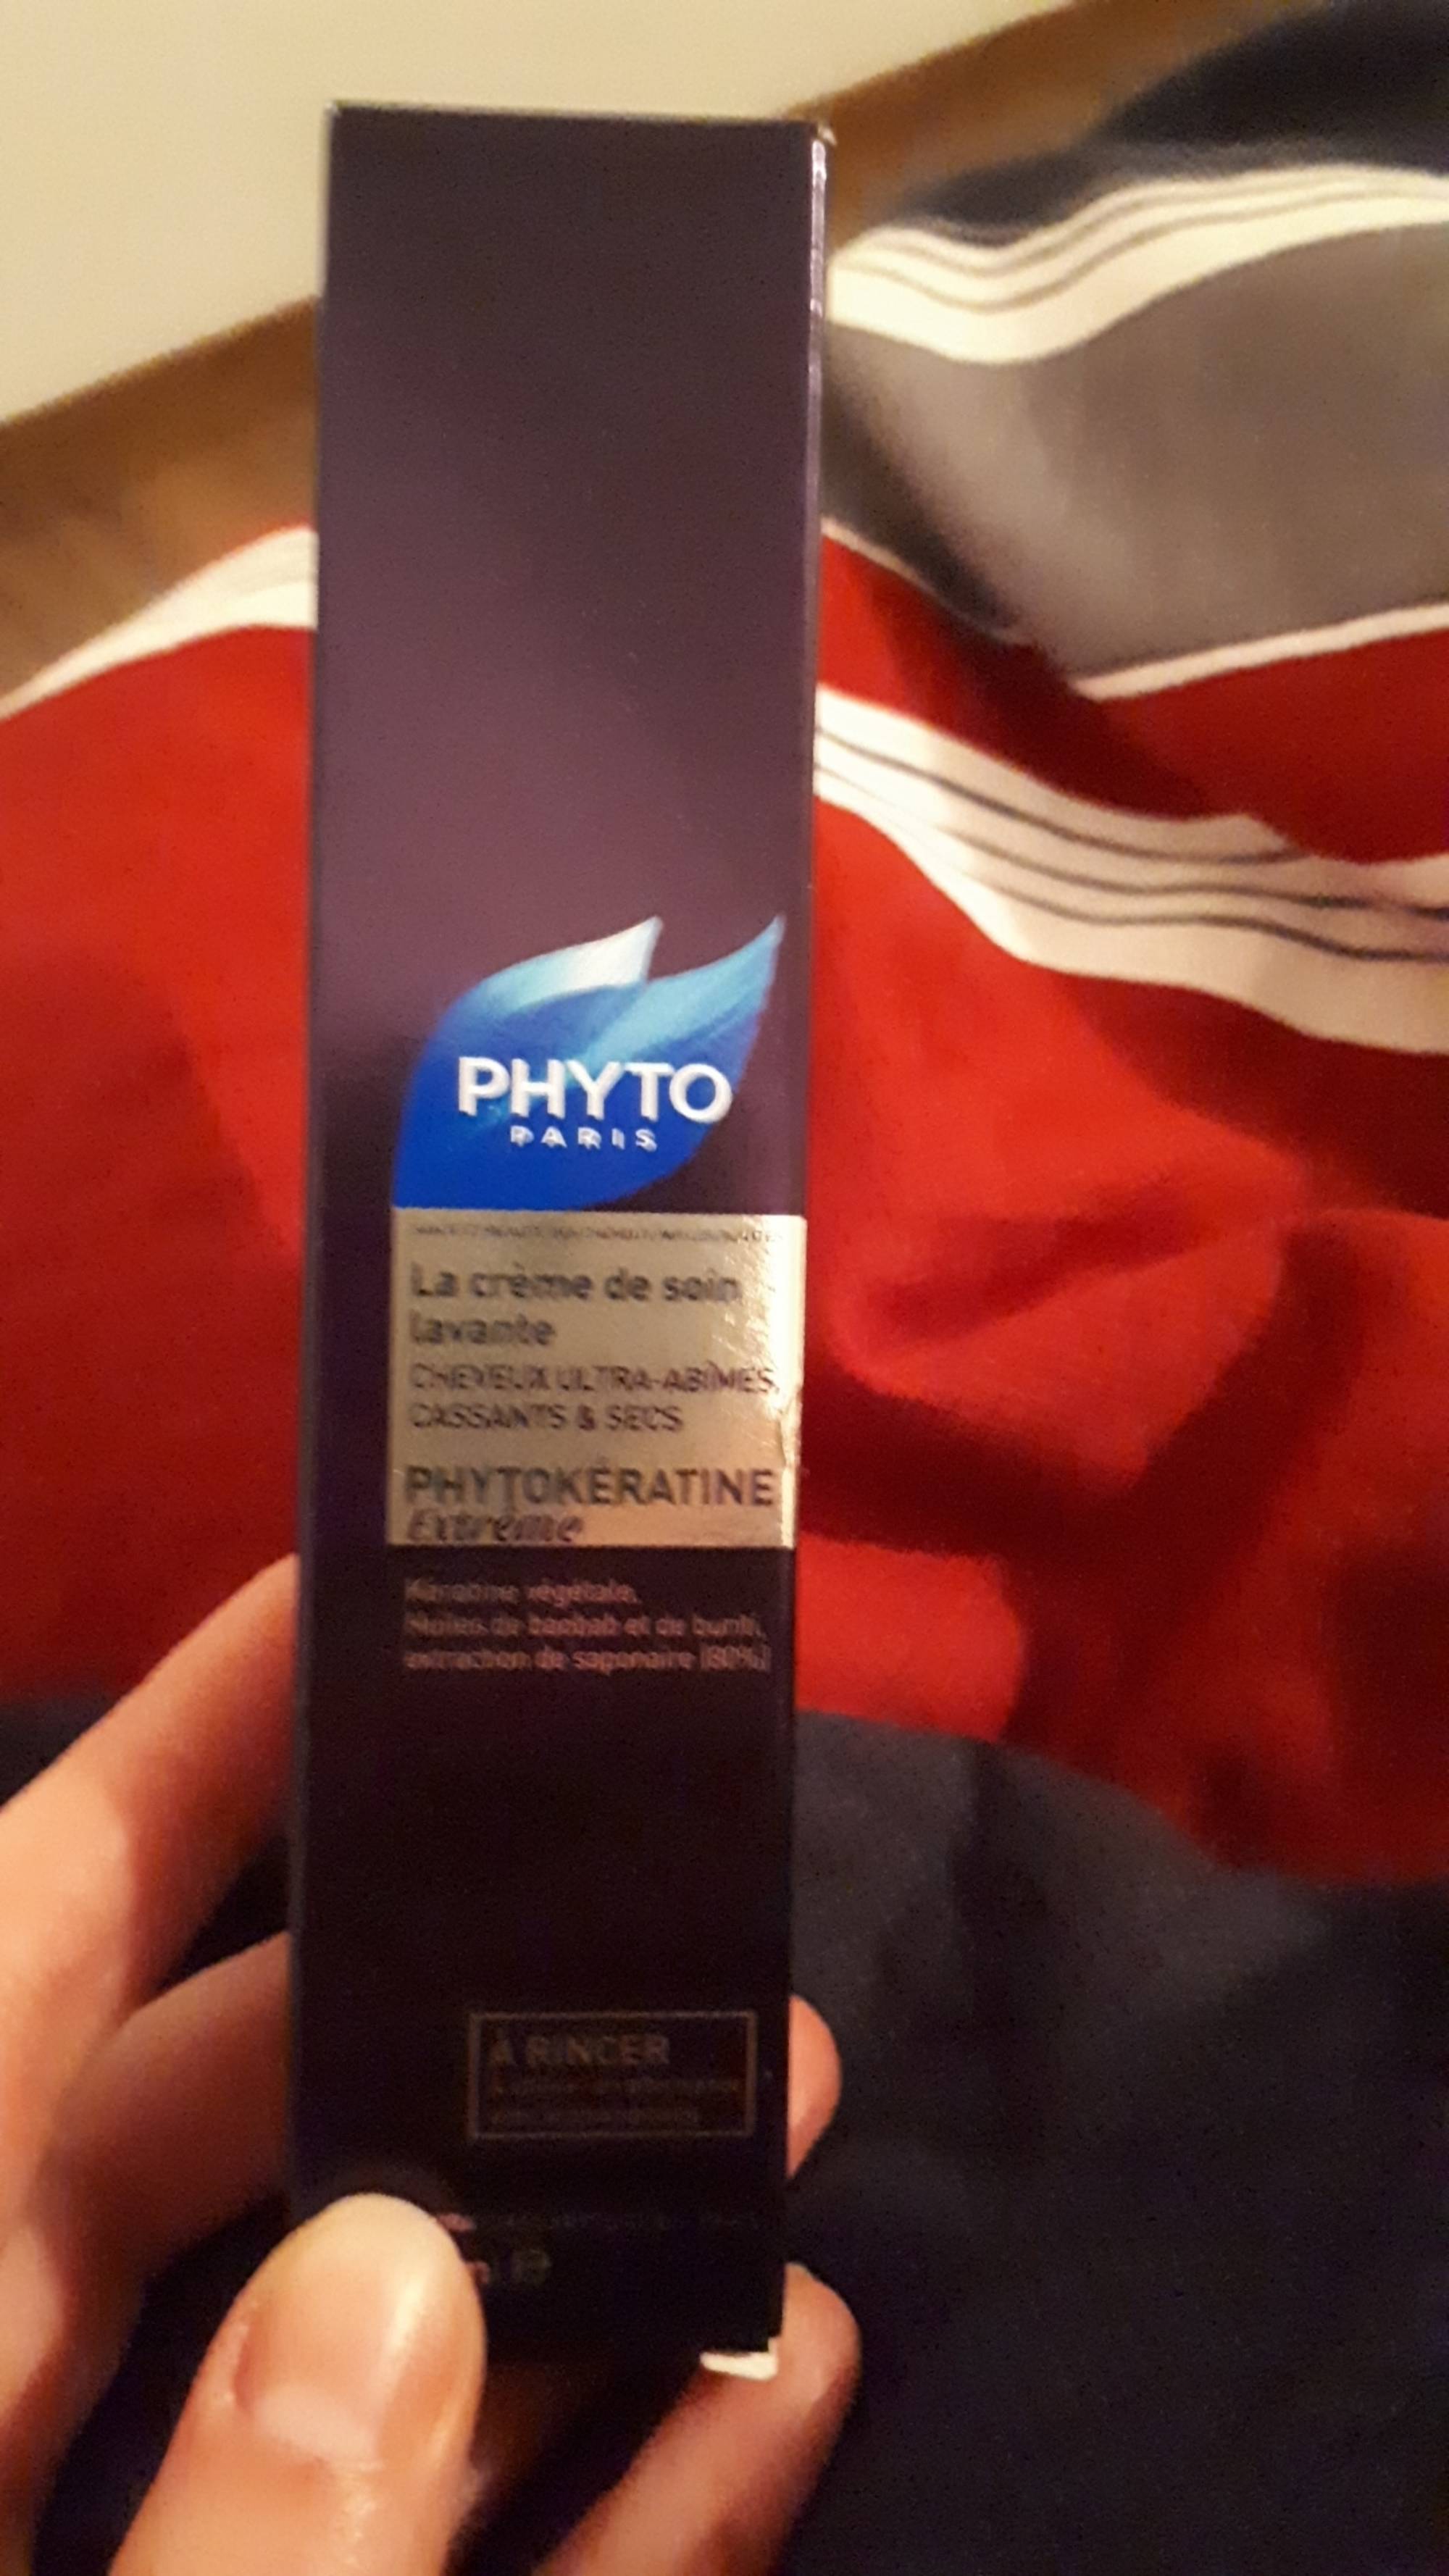 PHYTO PARIS - Phytokératine extrême - Crème de soin lavante